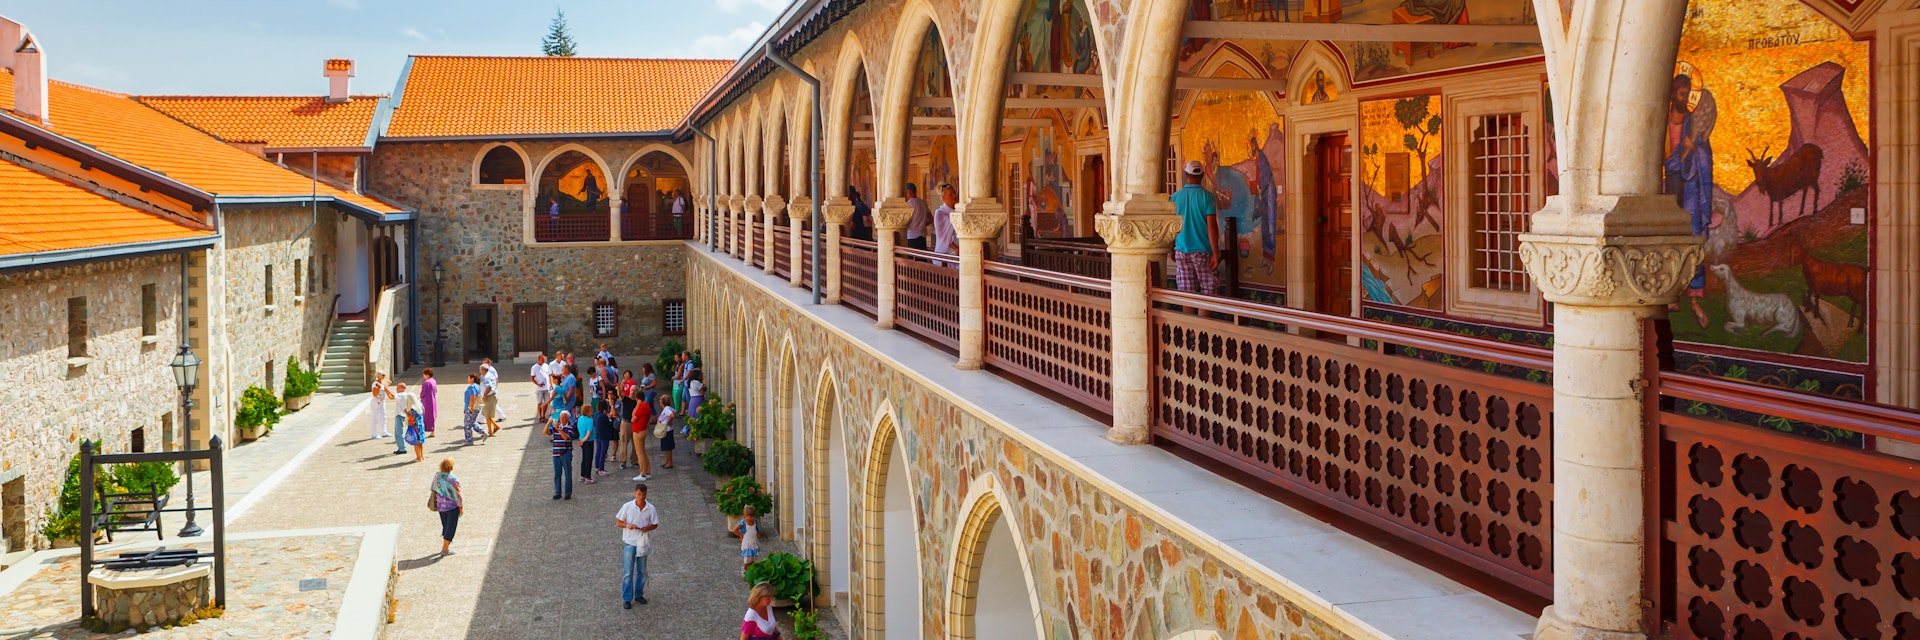 Courtyard in Kykkos monastery.